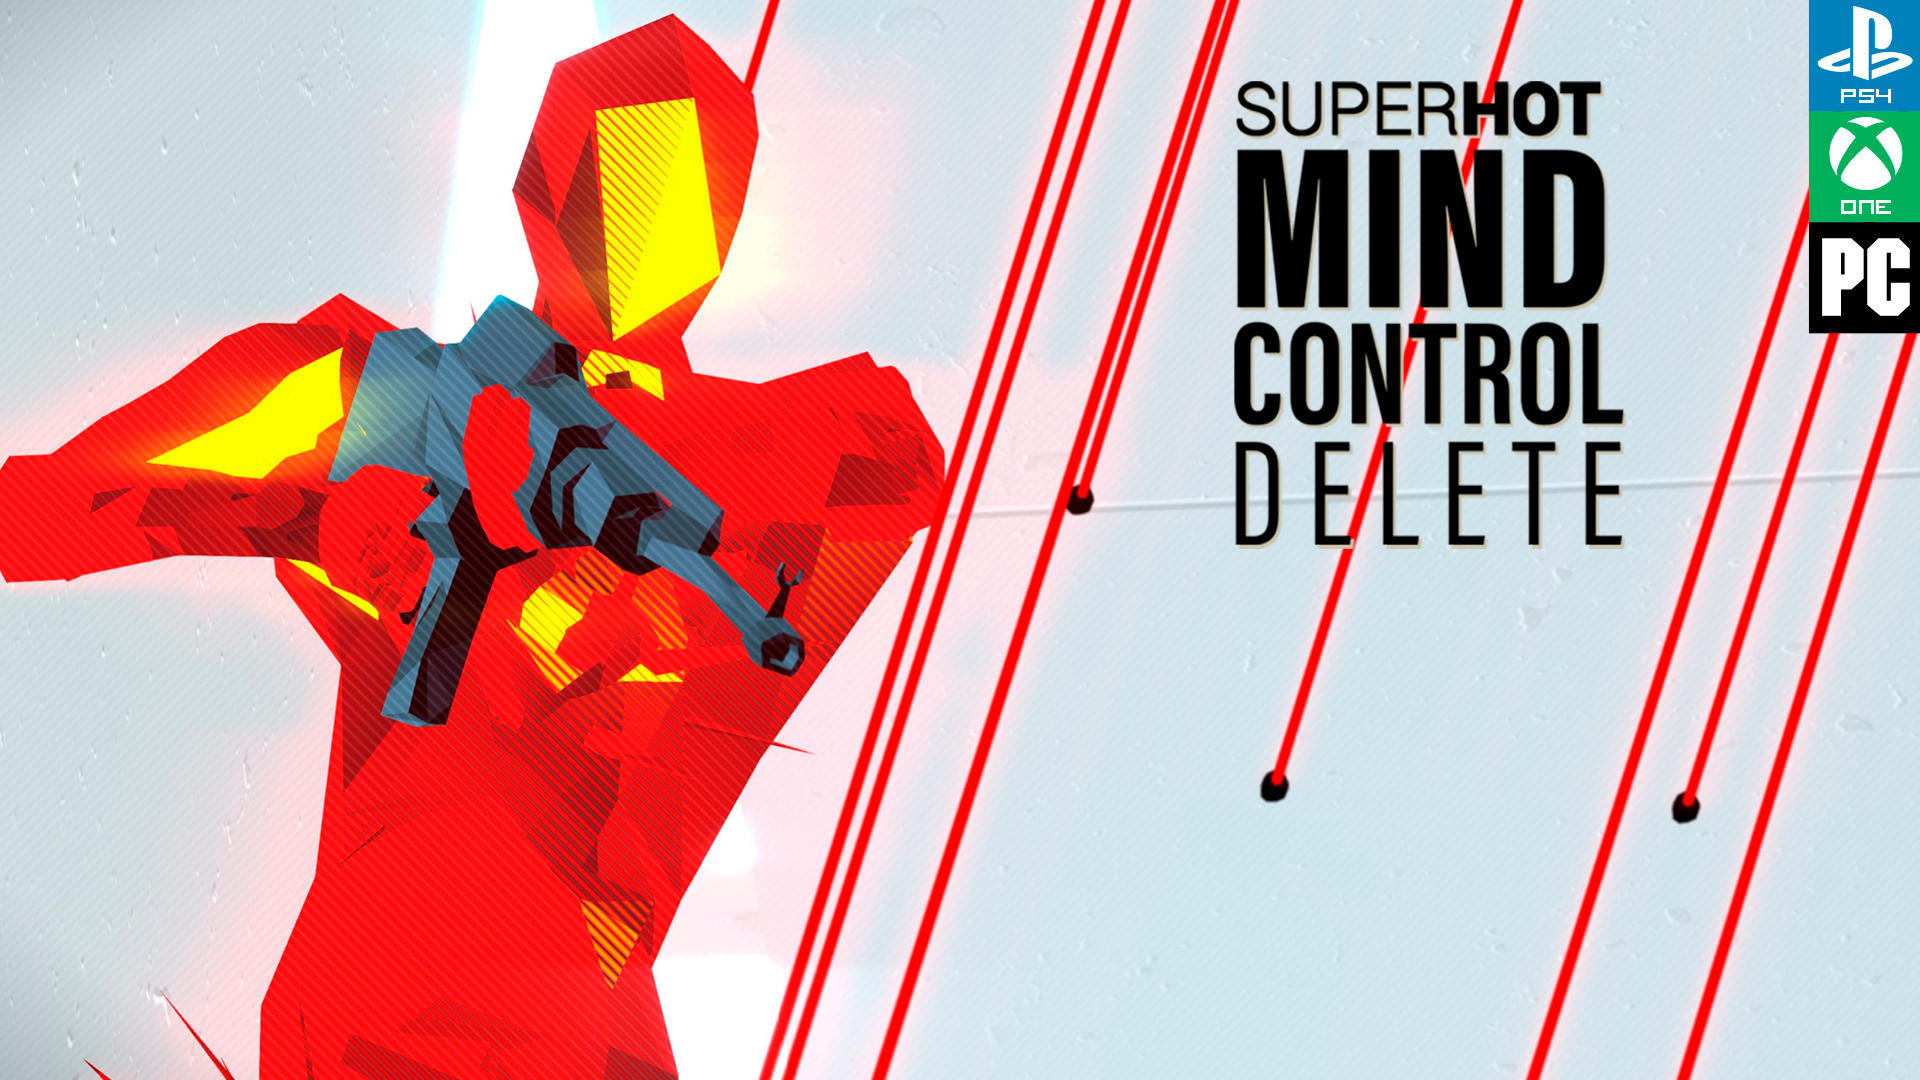 superhot mind control delete switch